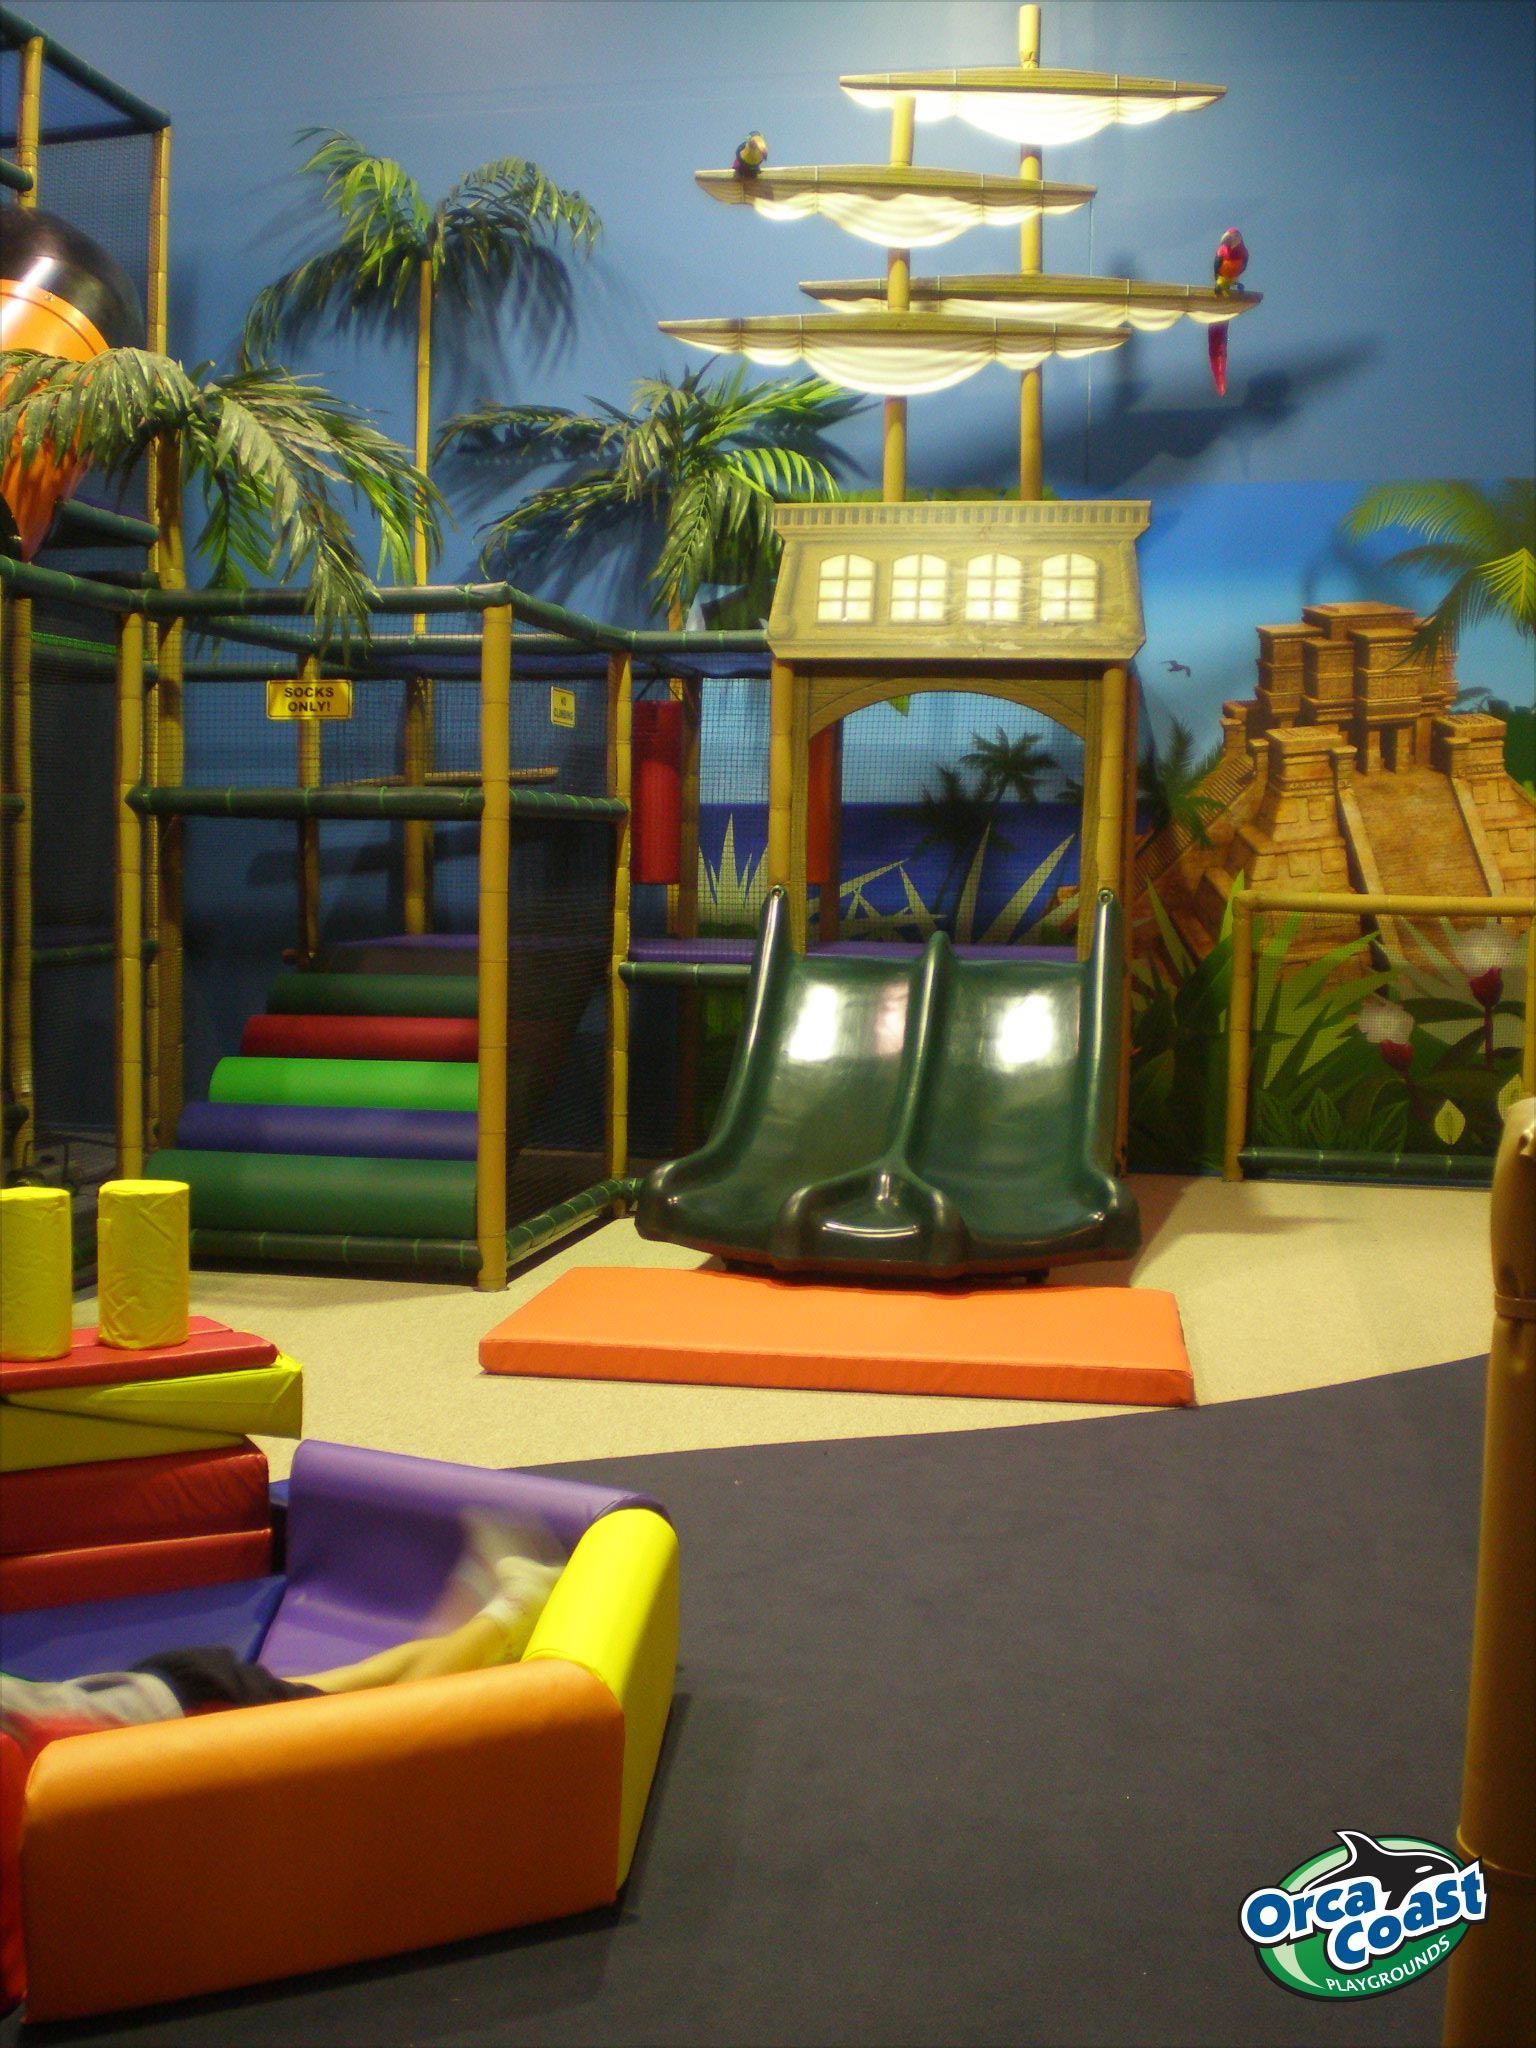 Gecko’s Family Fun Centre: A Tropical Paradise in Queensland, Australia